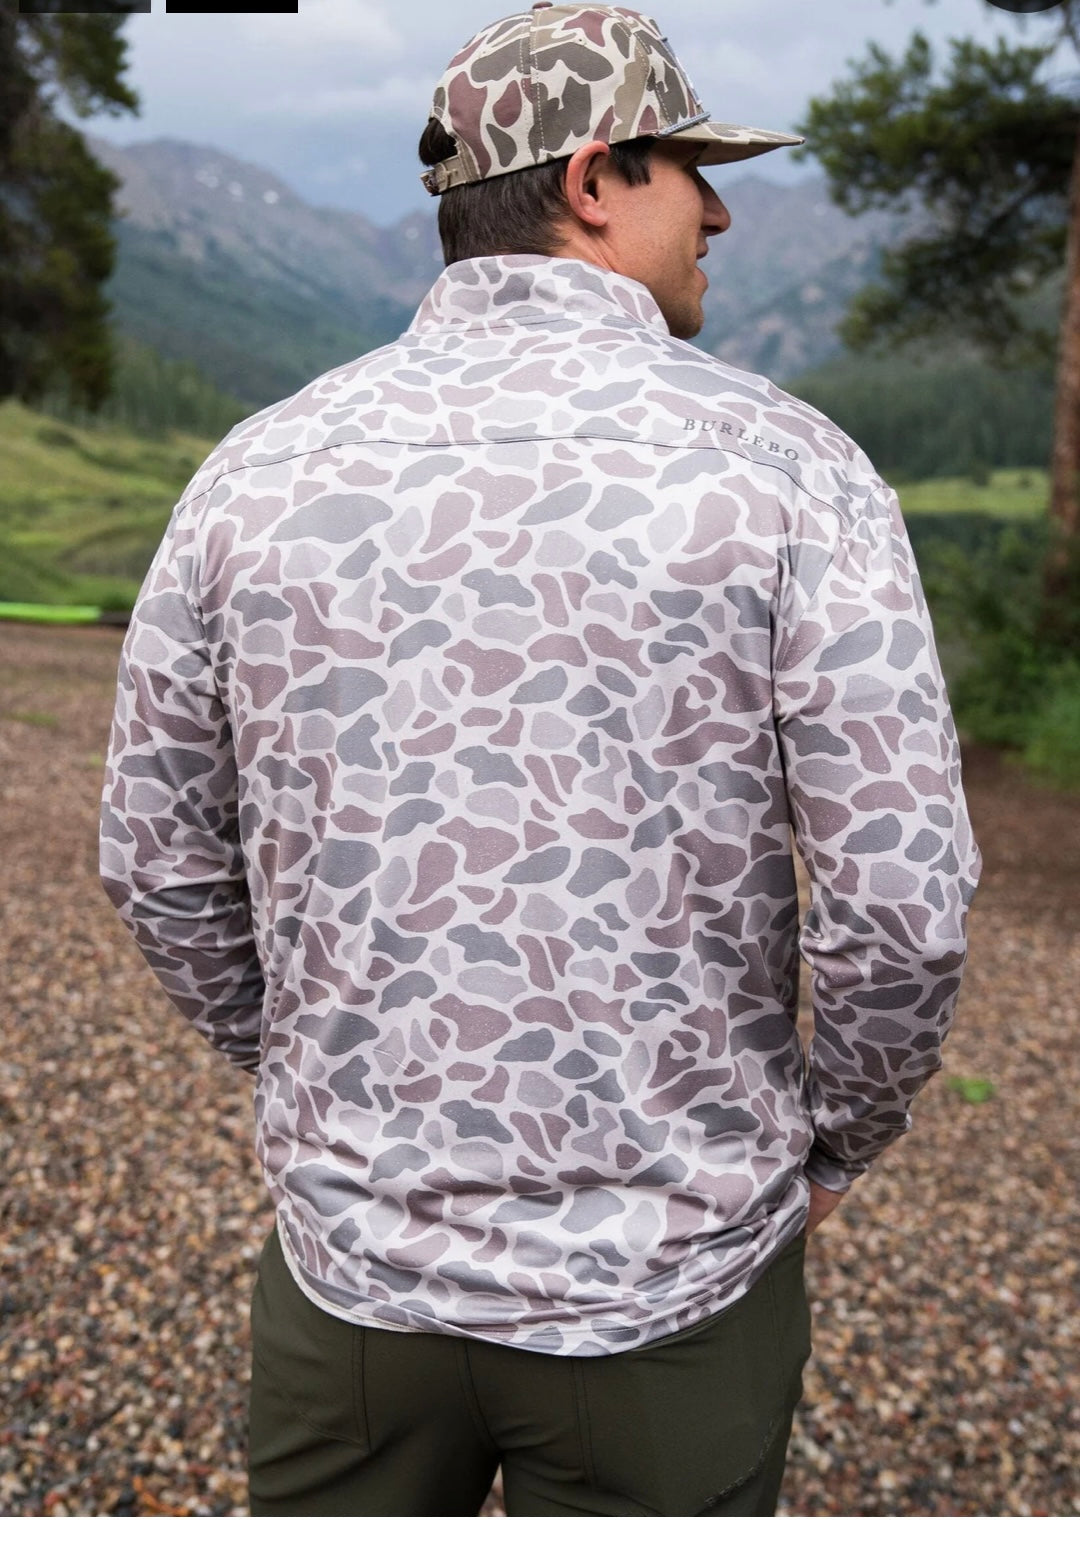 Quarter zip long-sleeve pullover in a classic deer camo print